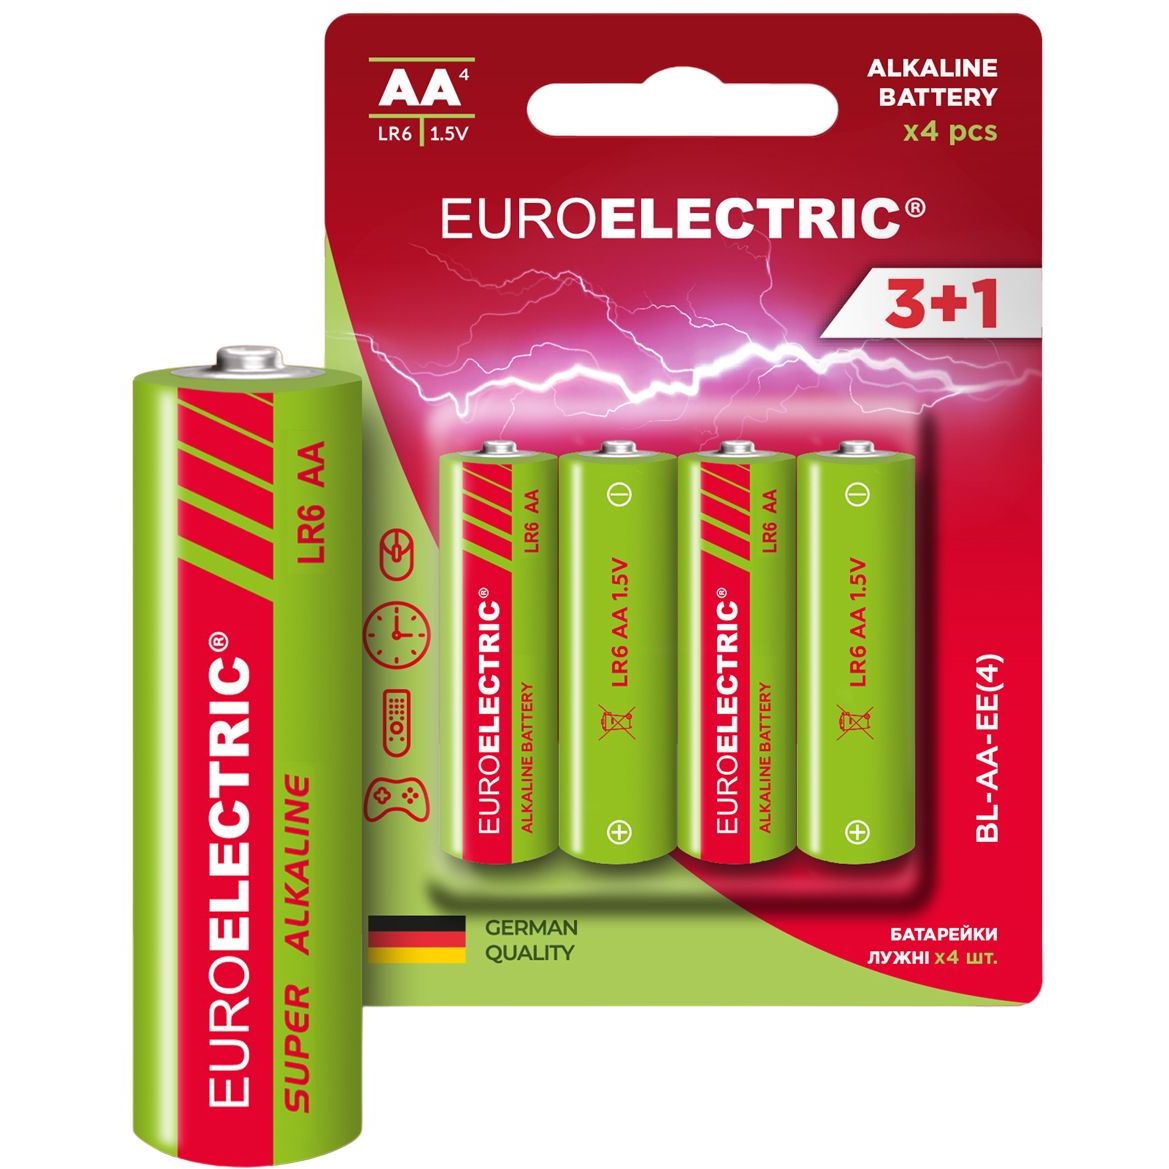 Батарейки Euroelectric AA LR6 1,5V, 4 шт. - фото 1